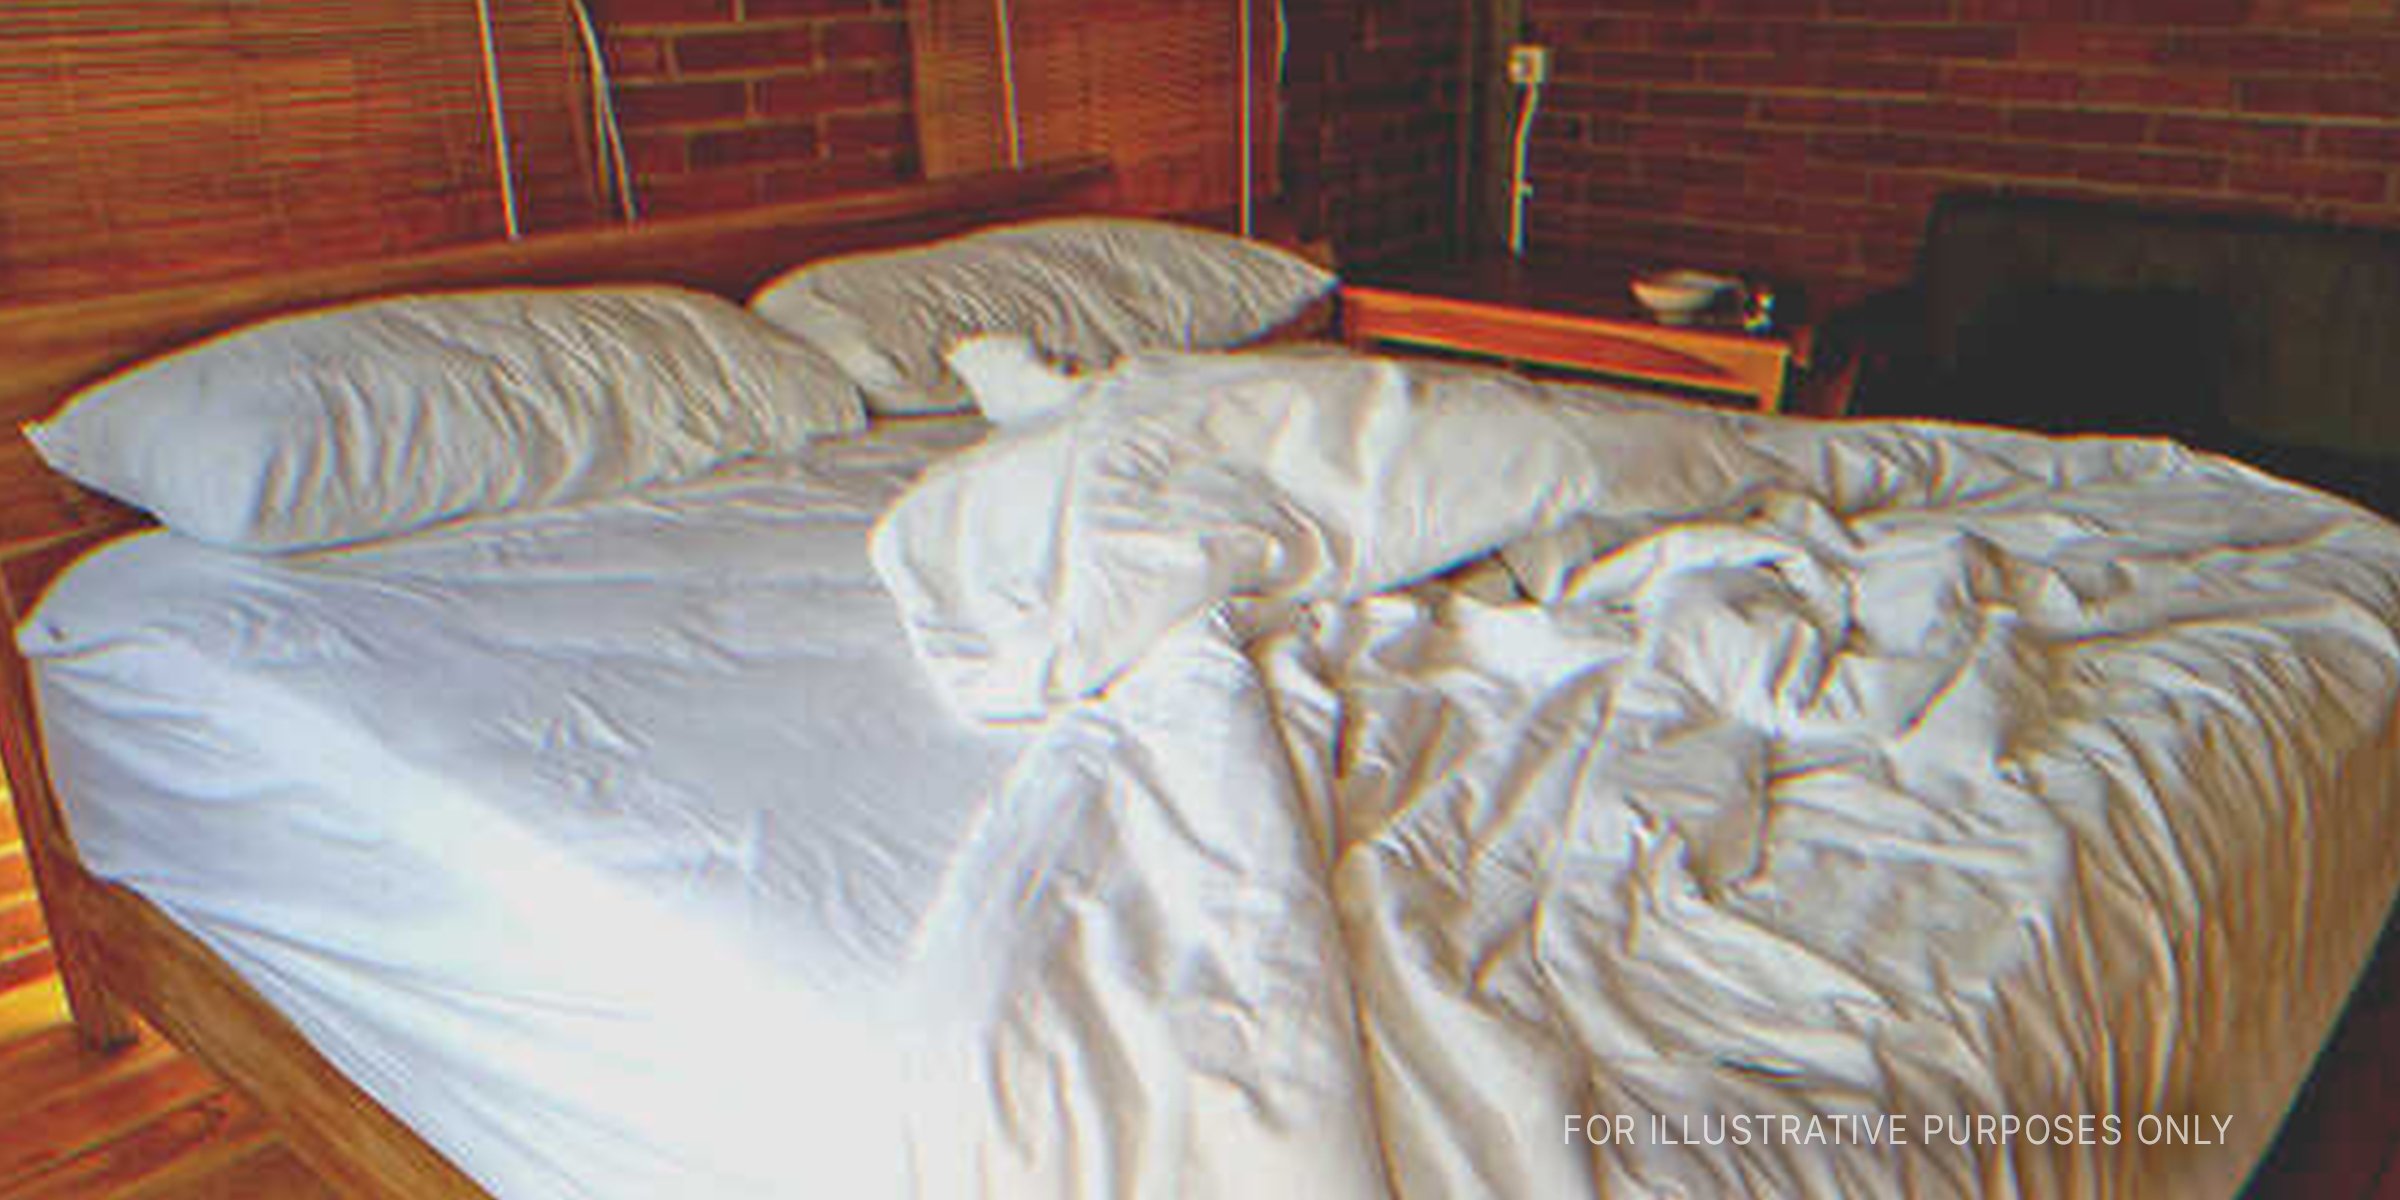 Empty, unmade bed. | Source: Shutterstock